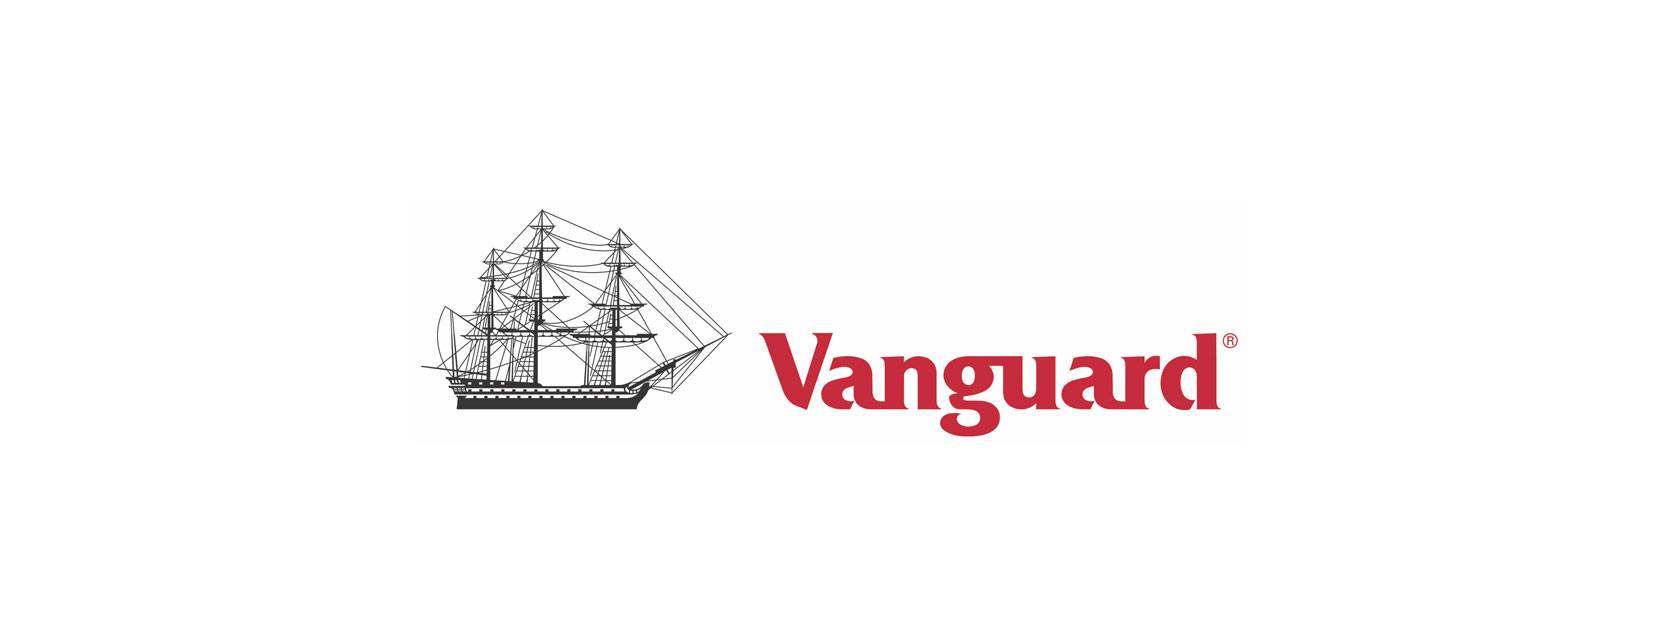    vanguard    group 